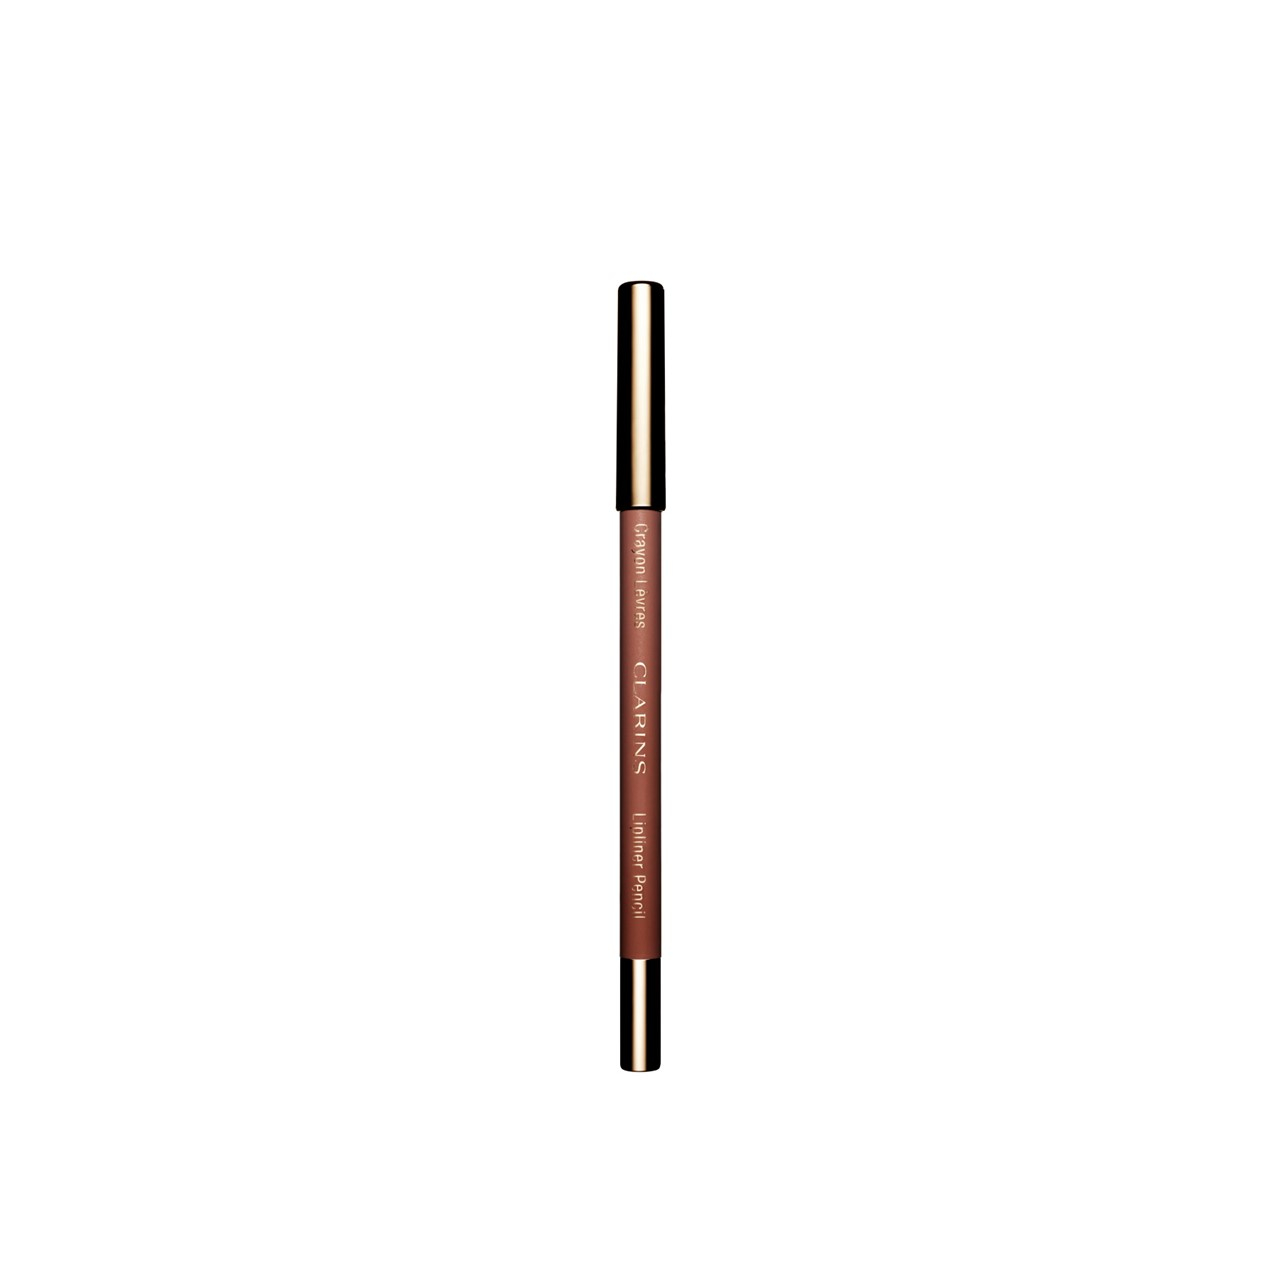 Clarins Lipliner Pencil 02 Nude Beige 1.2g (0.04oz.)